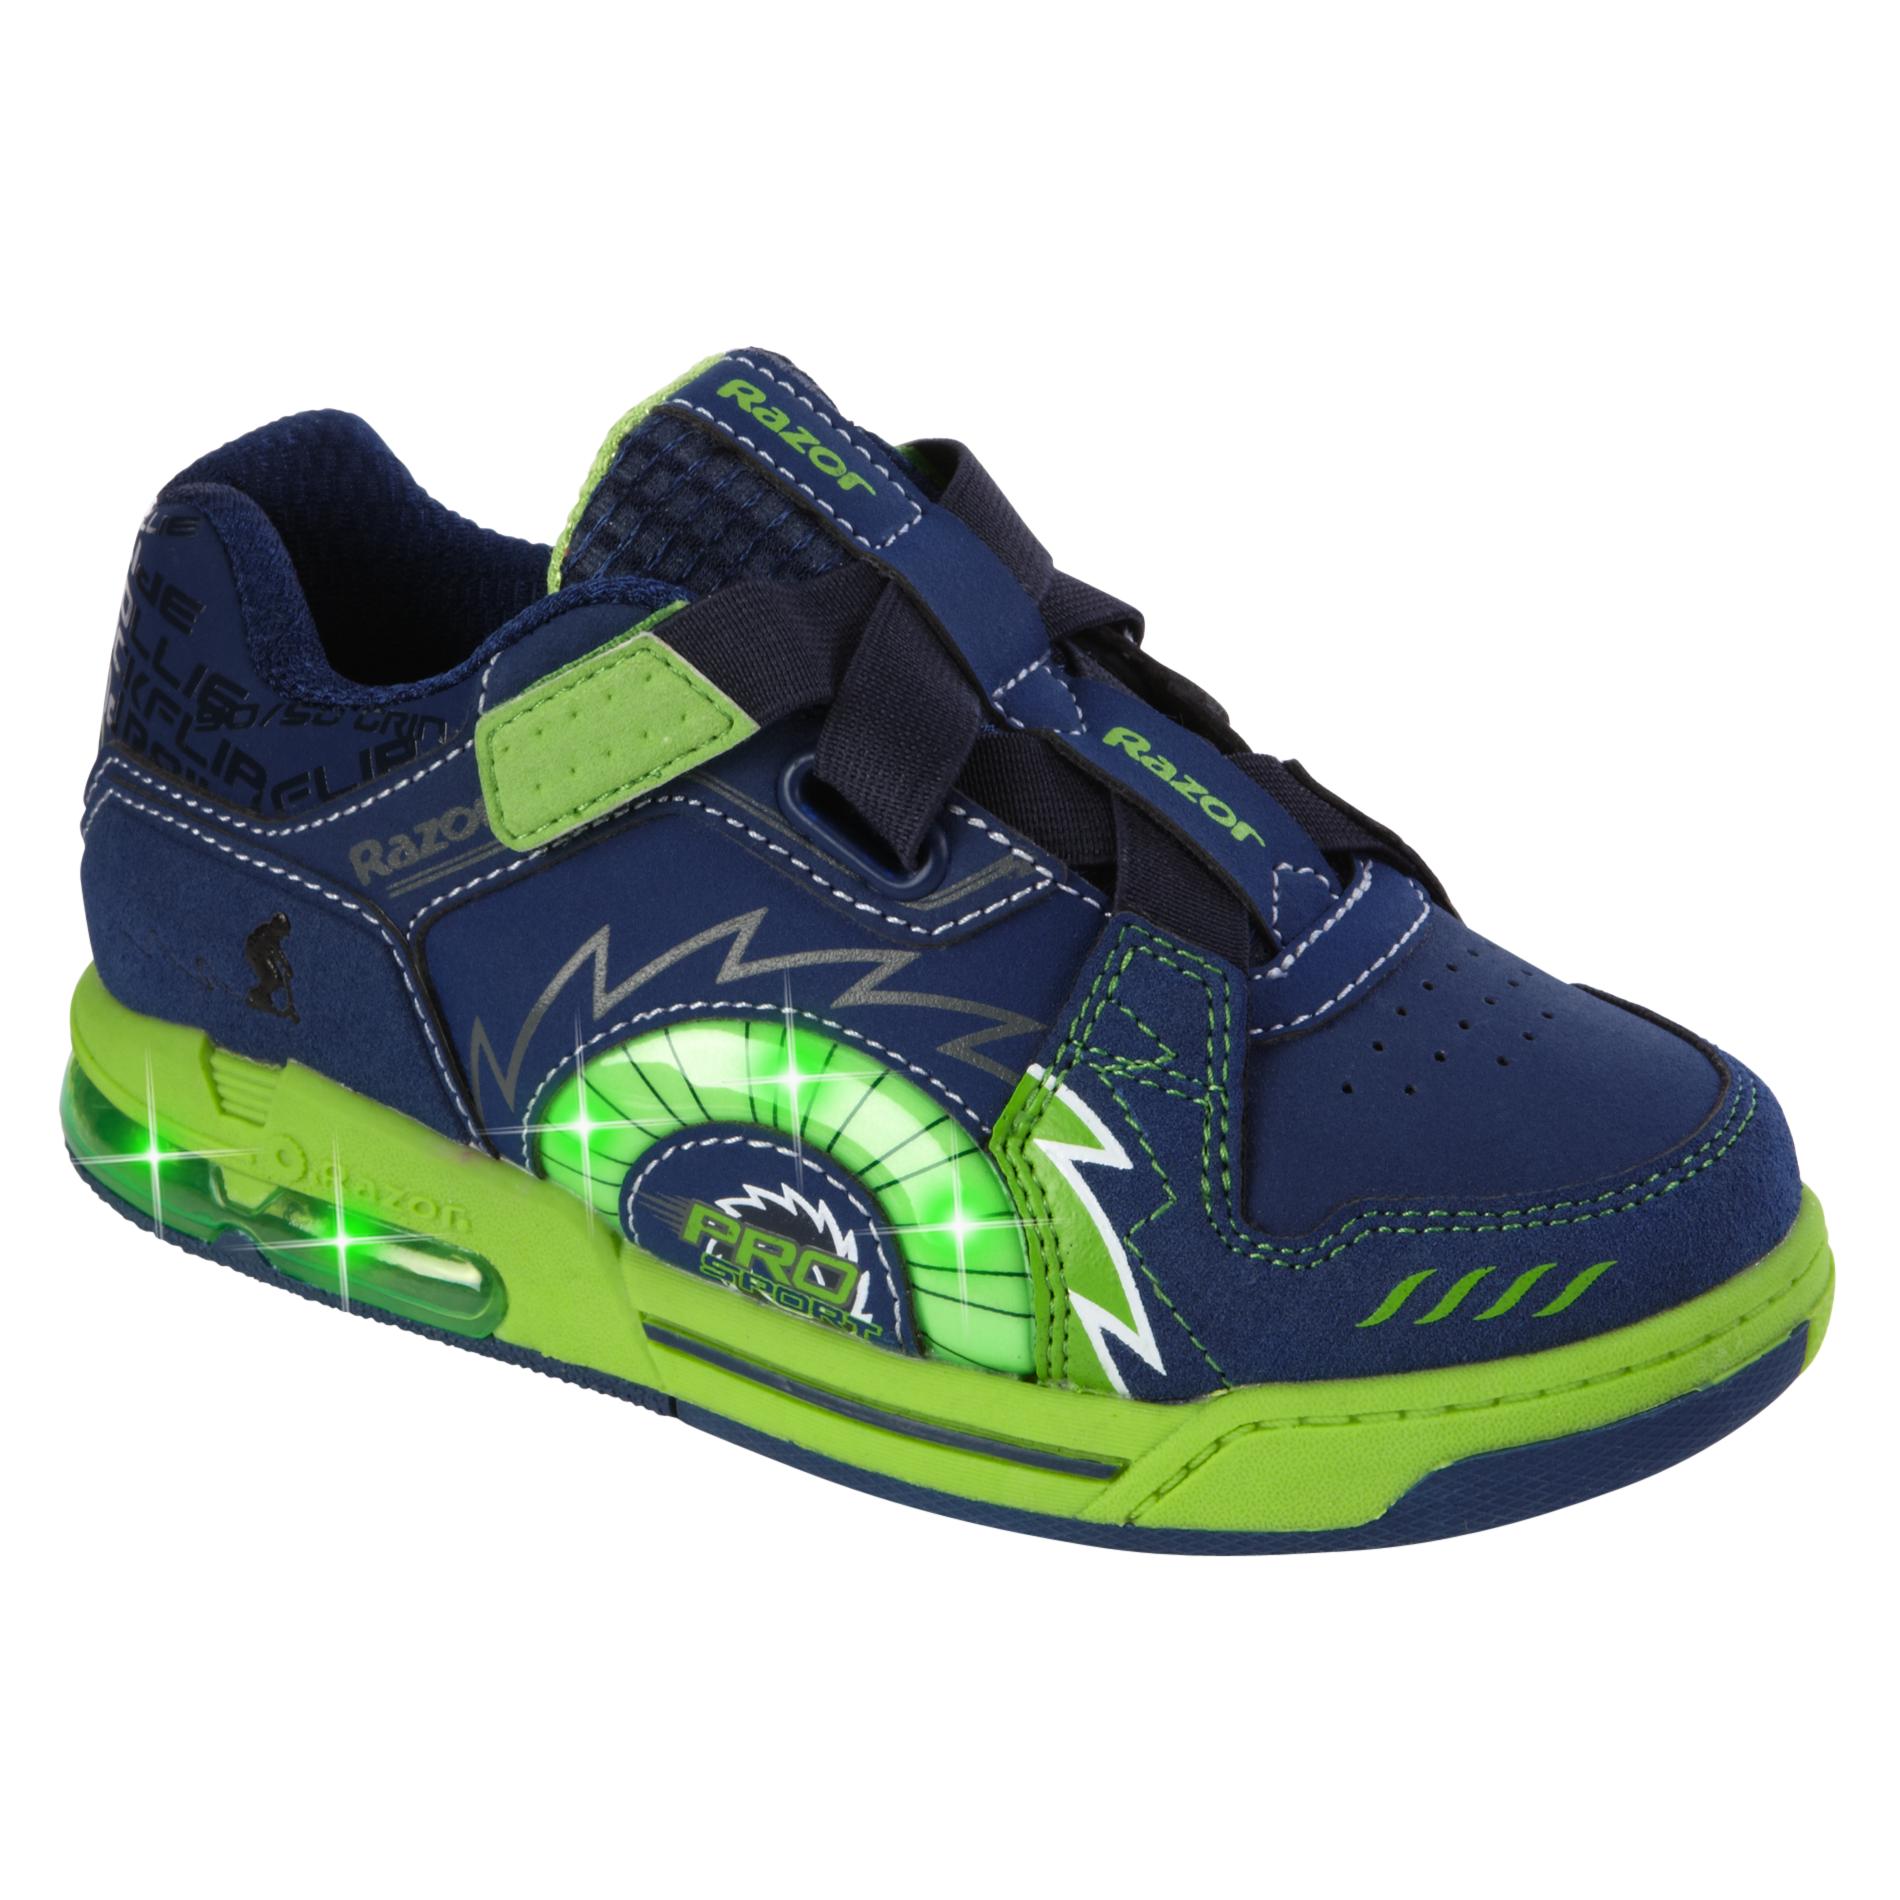 Razor&#174 Boy's Athletic Shoe Razor - Blue/Green